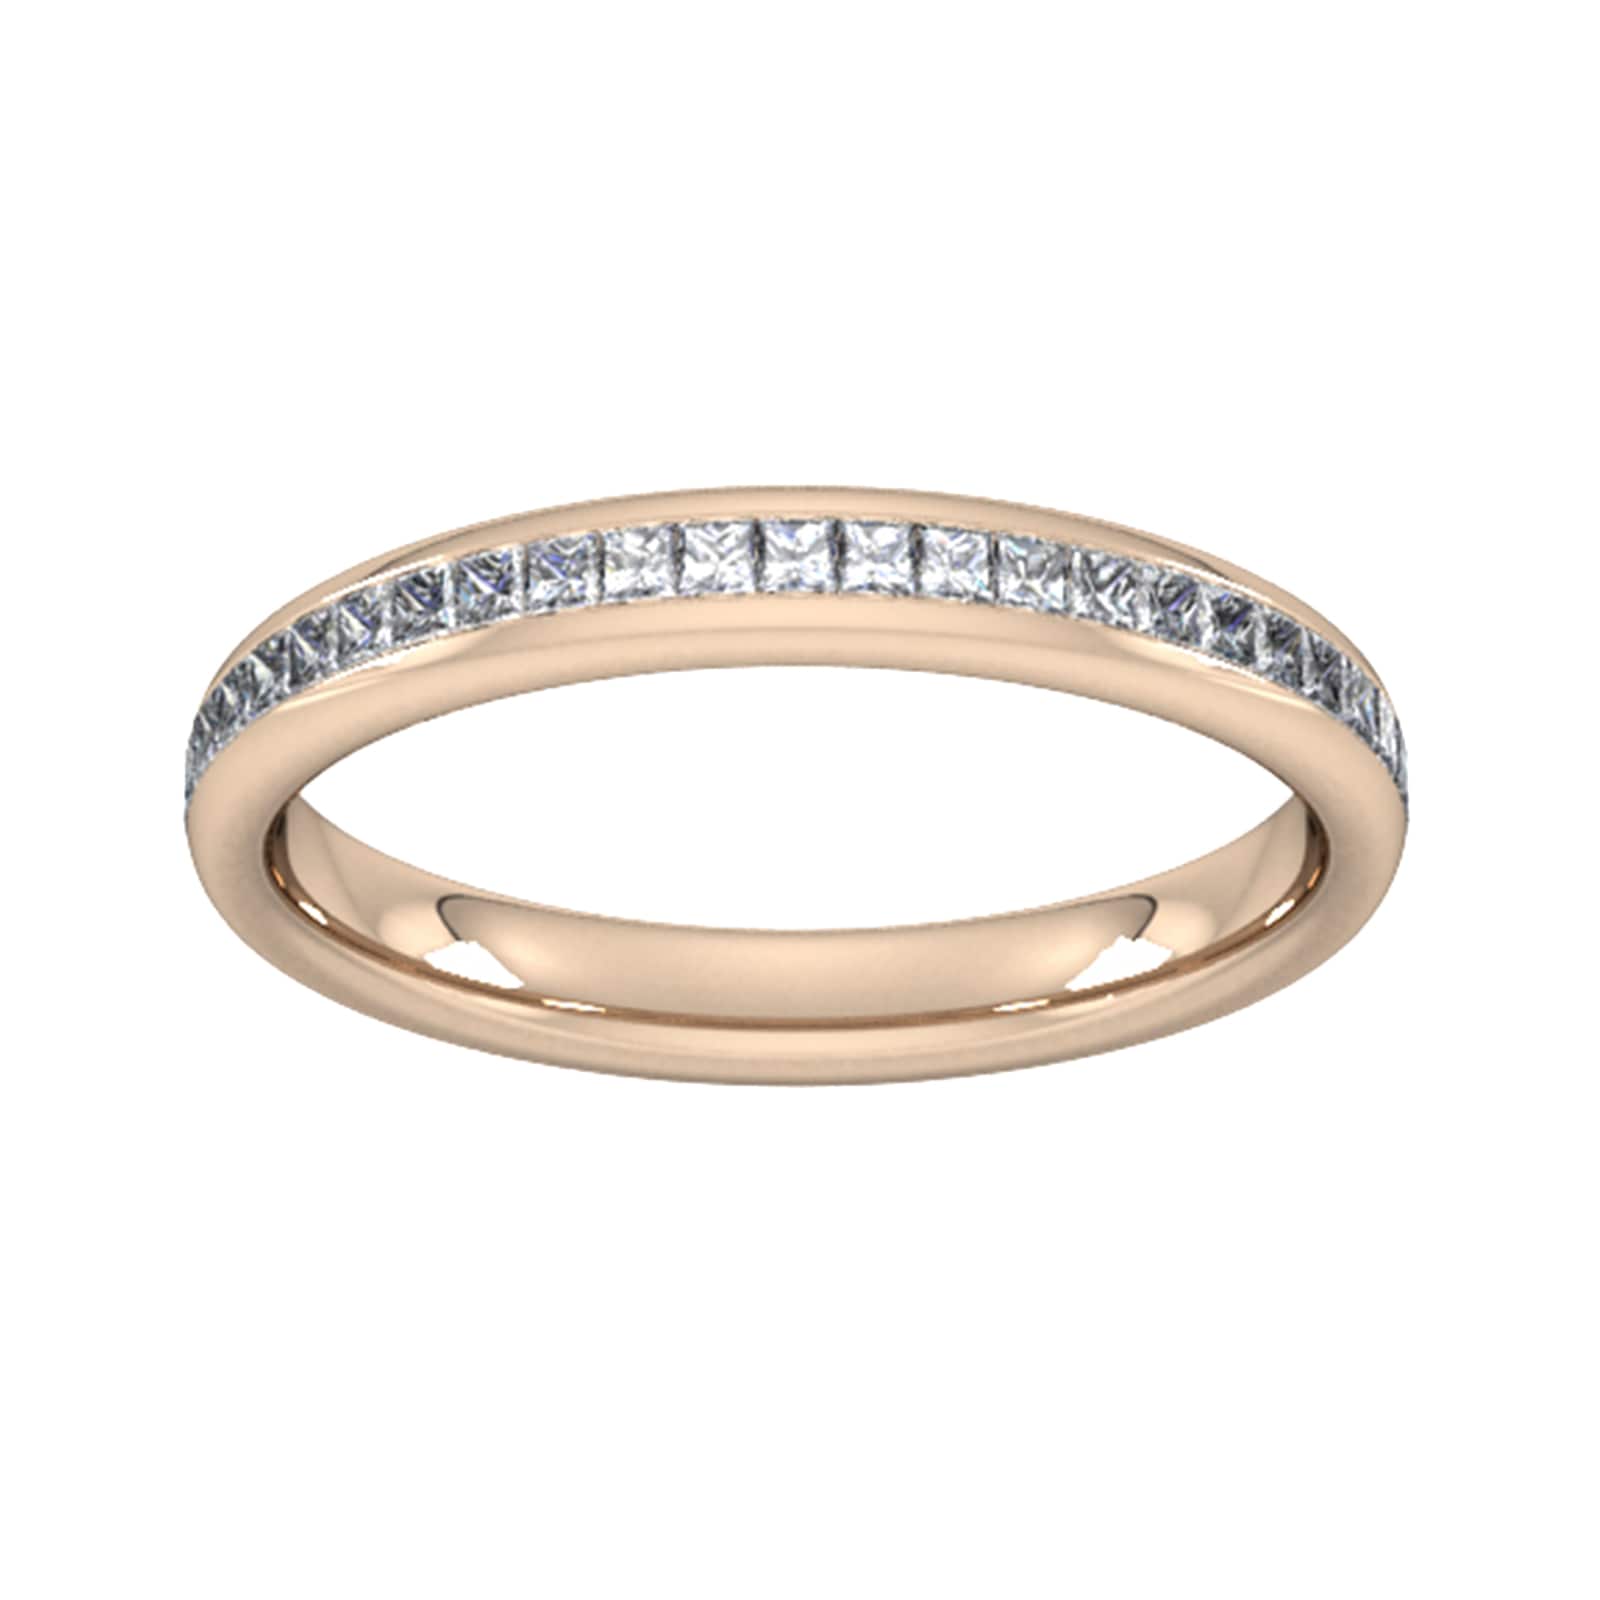 0.34 Carat Total Weight Princess Cut Channel Set Wedding Ring In 9 Carat Rose Gold - Ring Size U